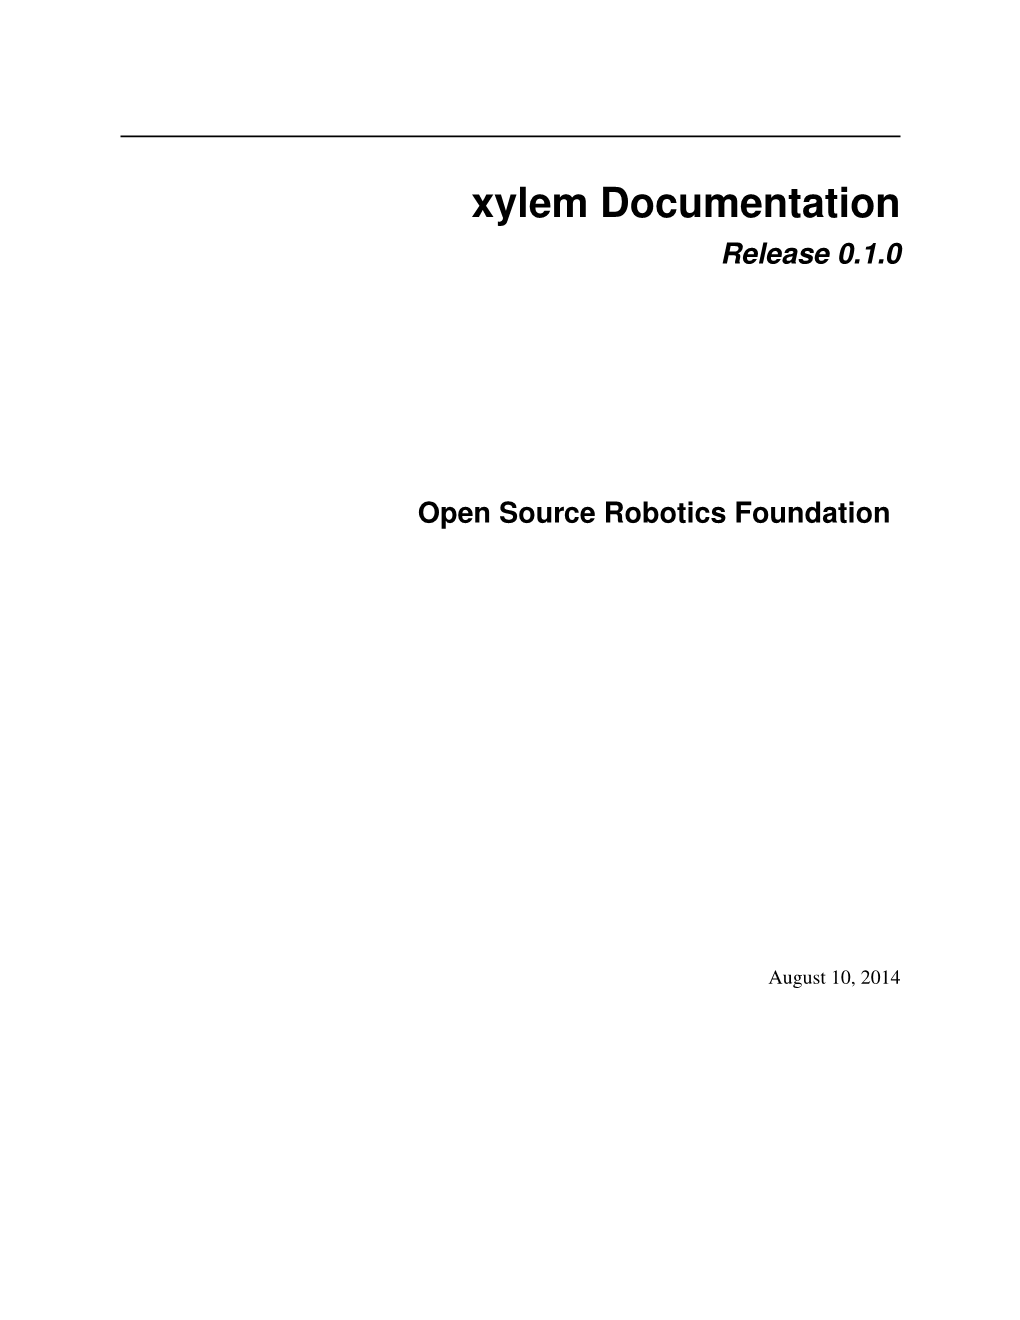 Xylem Documentation Release 0.1.0